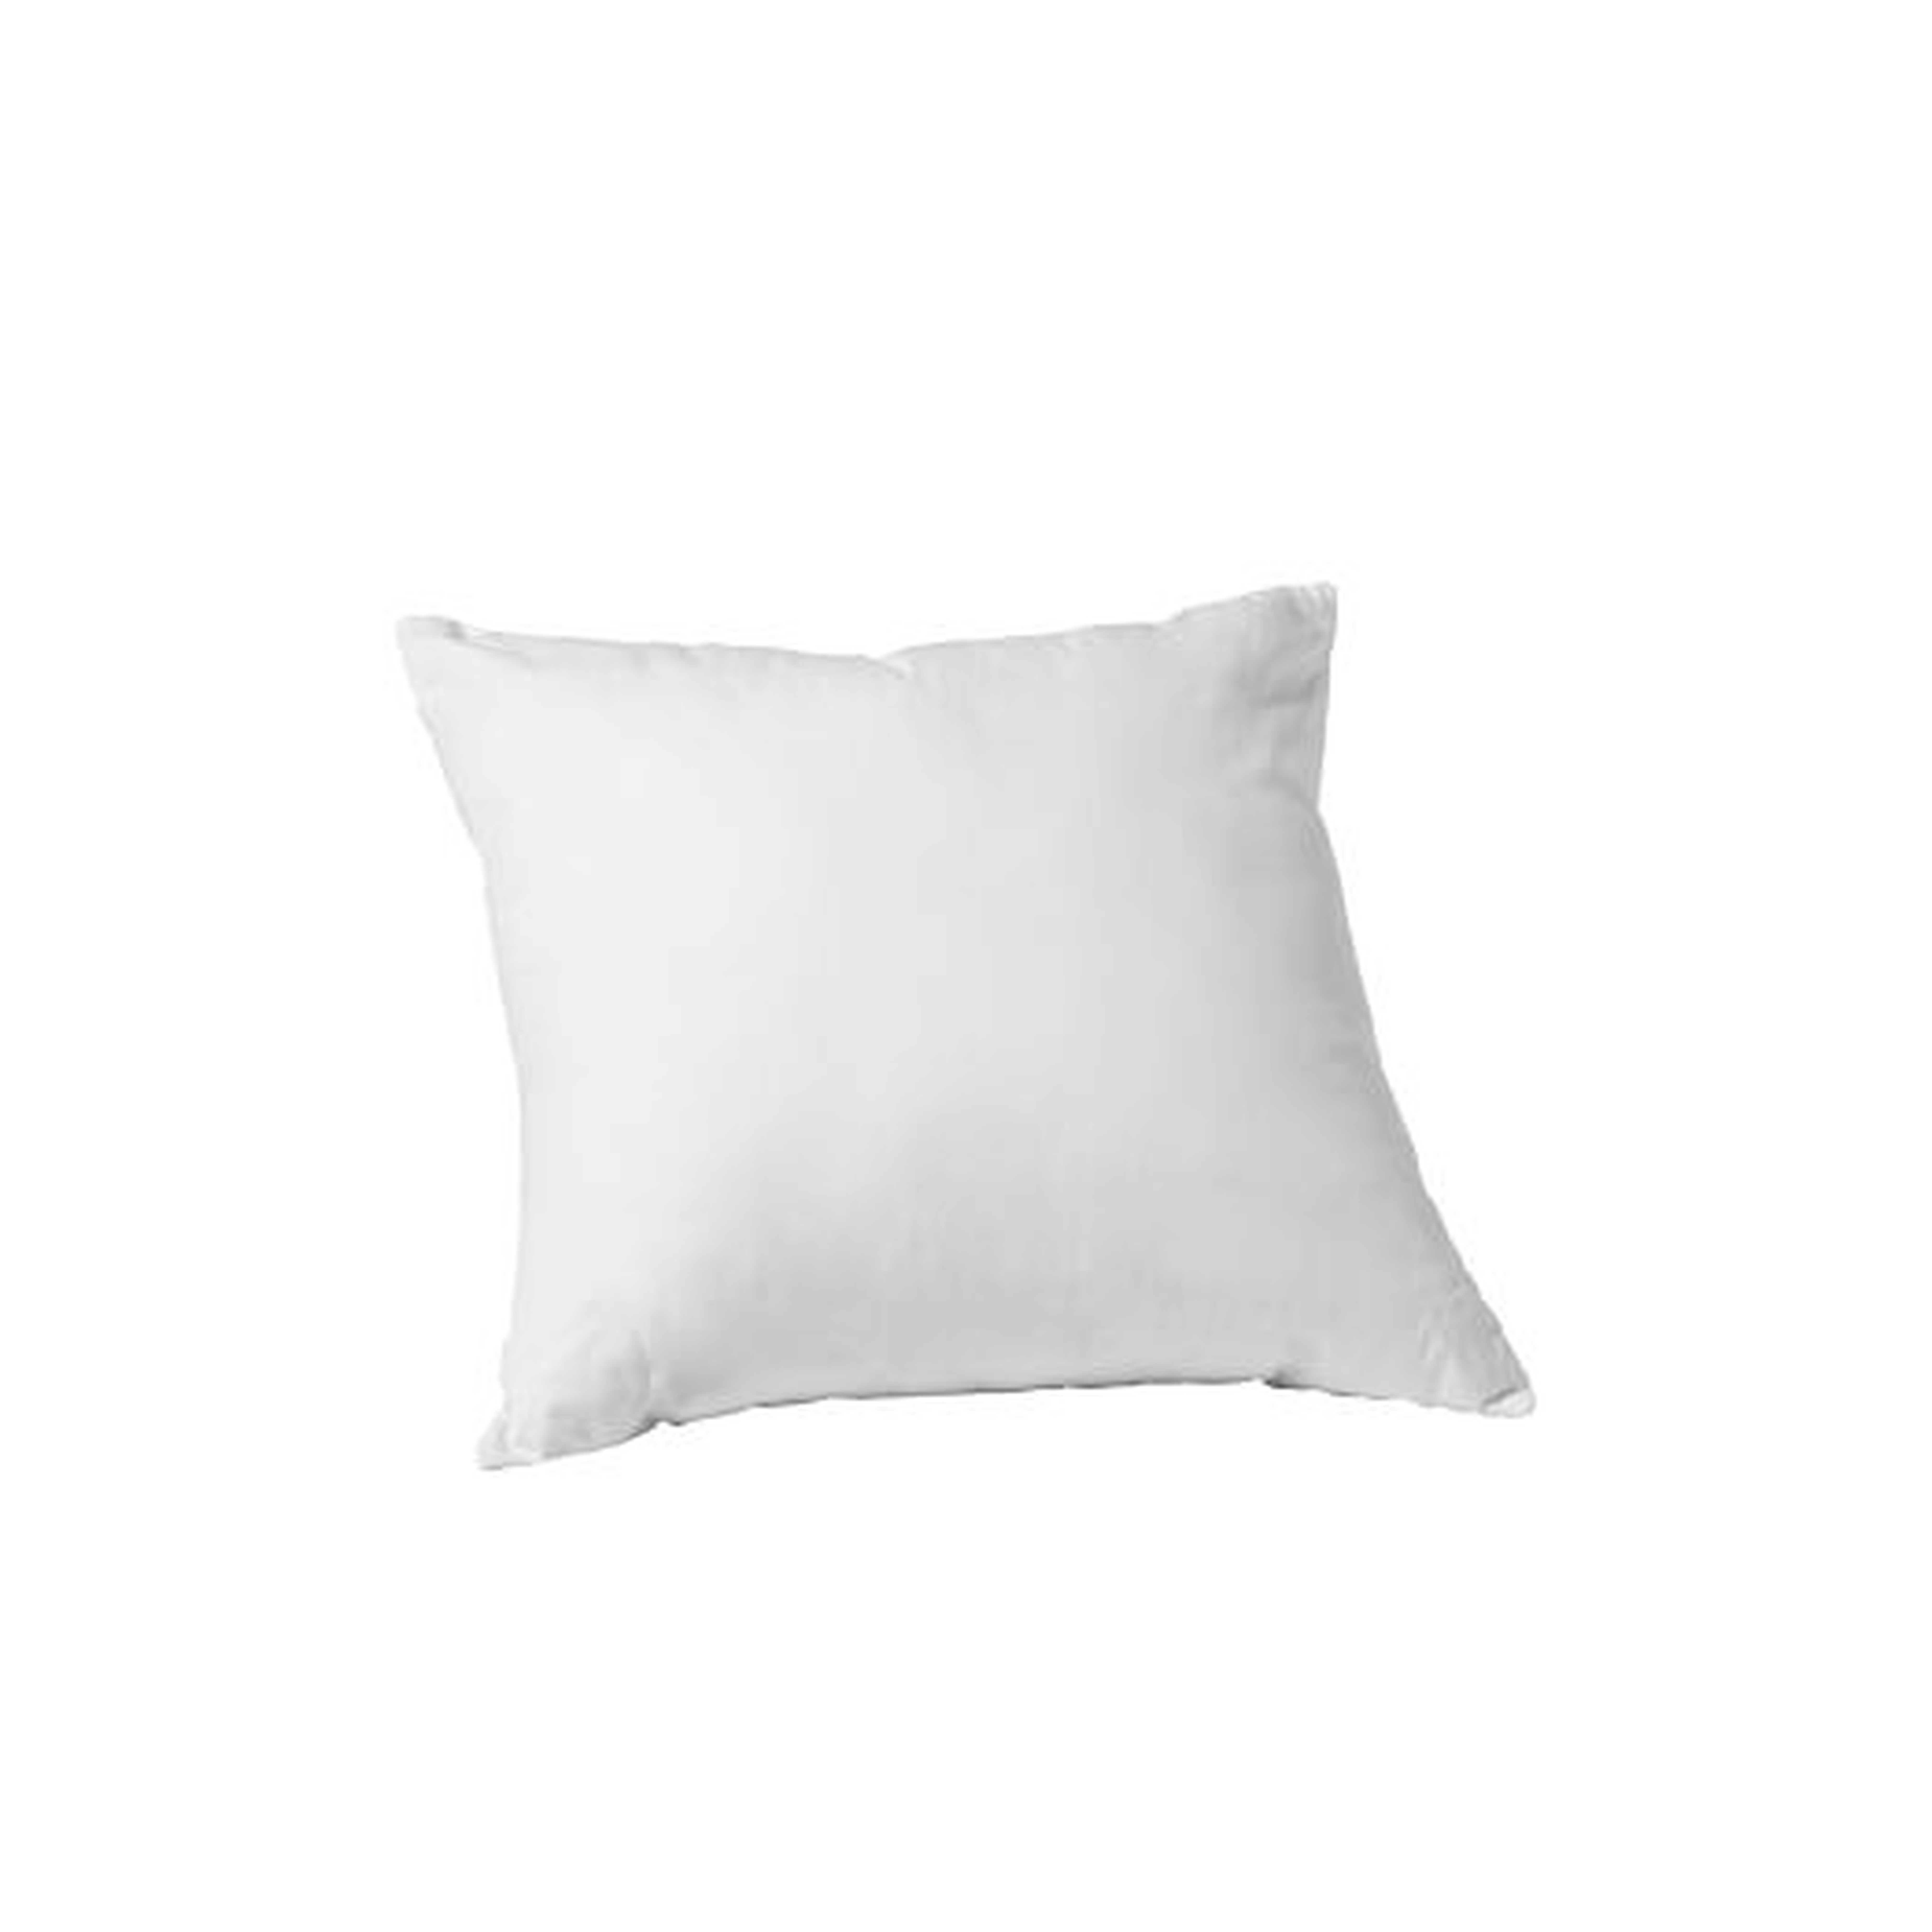 Decorative Feather Pillow Insert - 16" sq. - West Elm